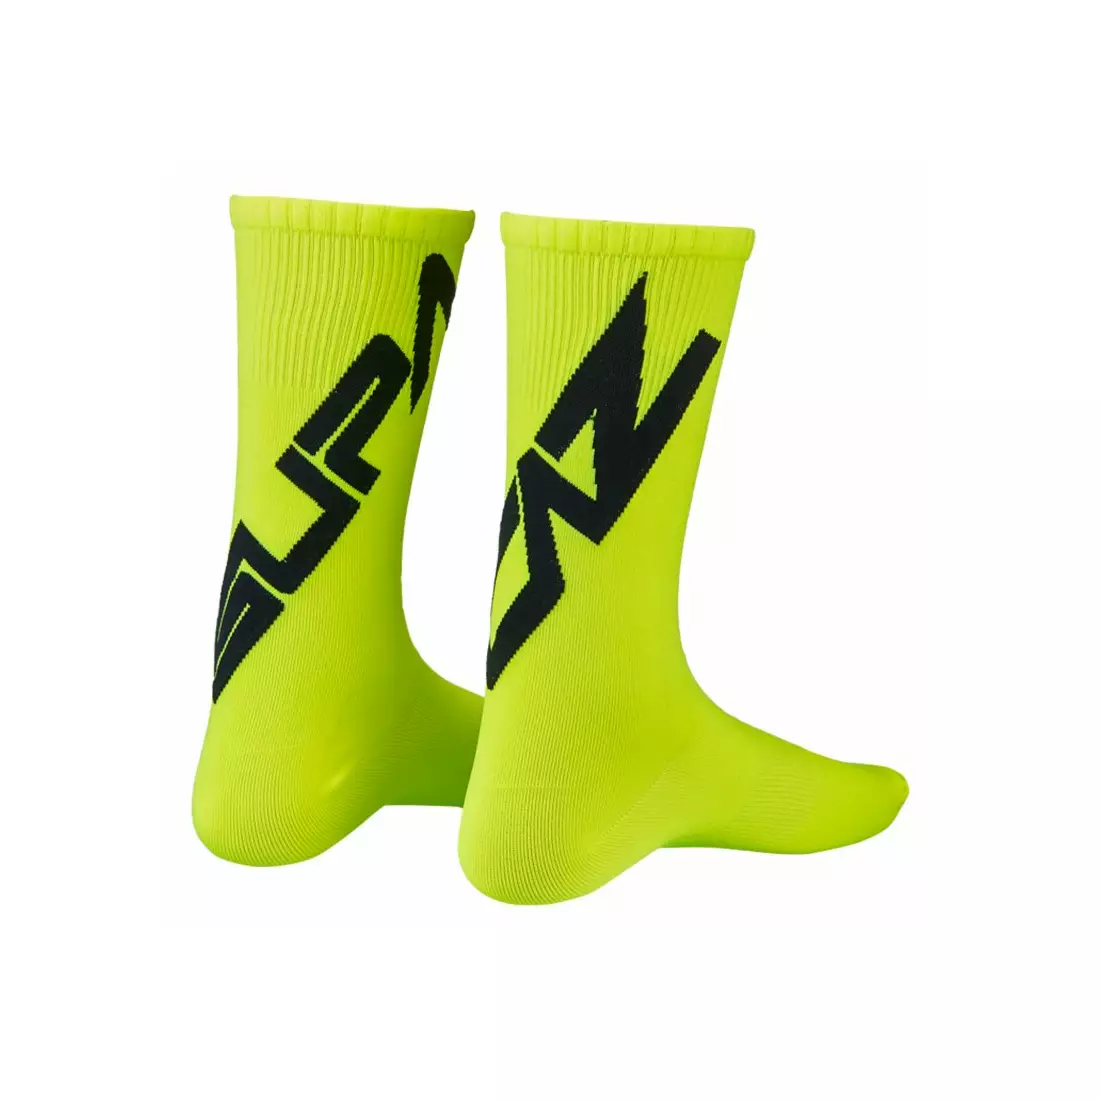 SUPACAZ cycling socks TWISTED neon yellow SX-54S